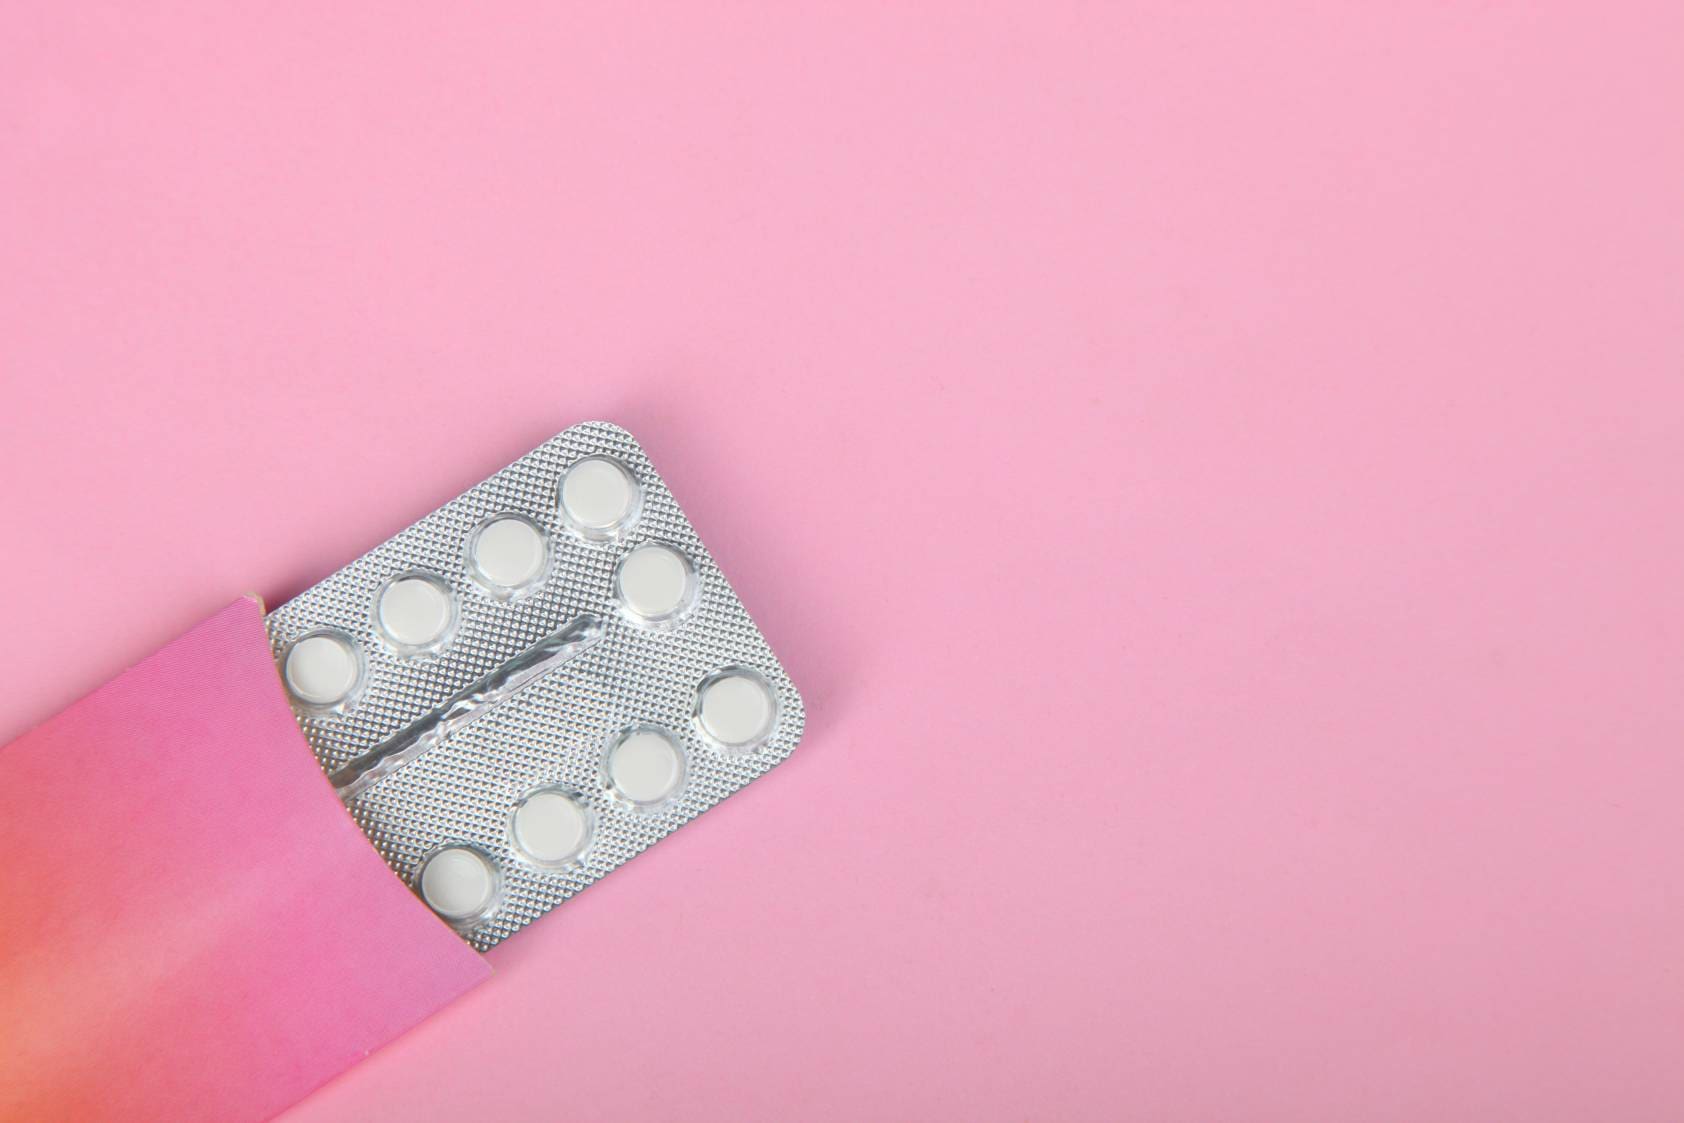 Contraception: long-term options for women